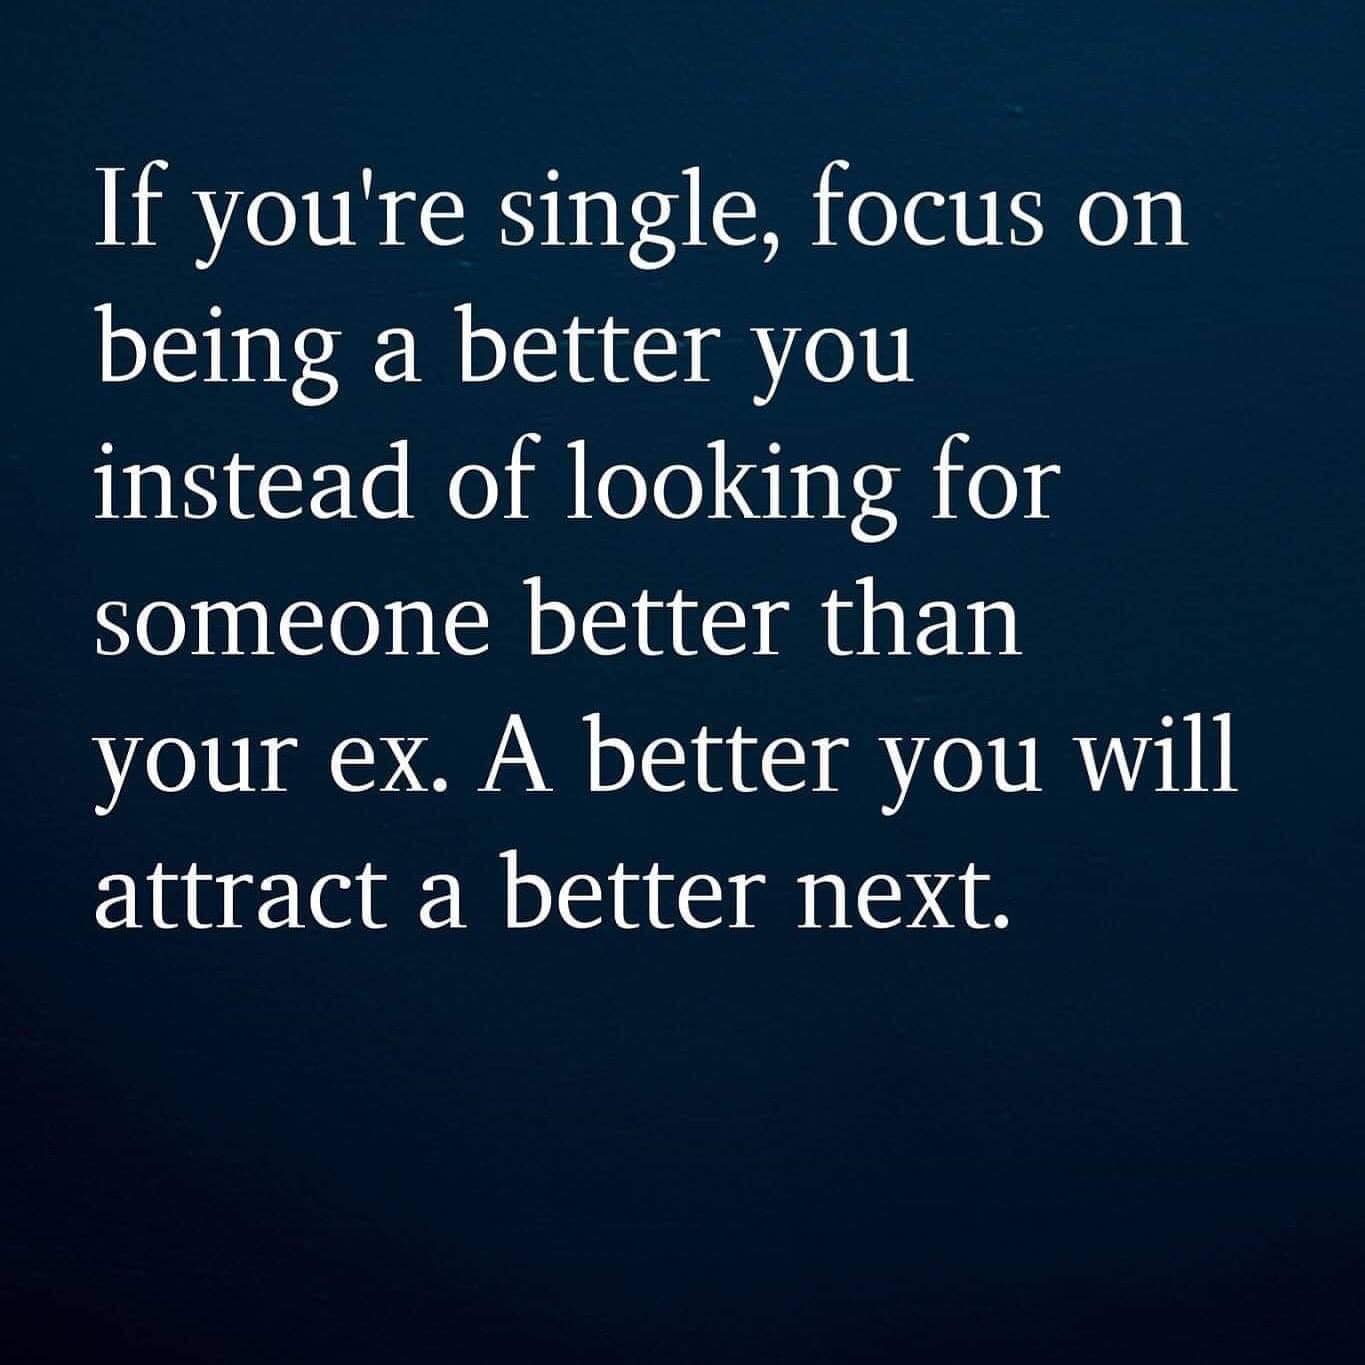 A better you attract a better next